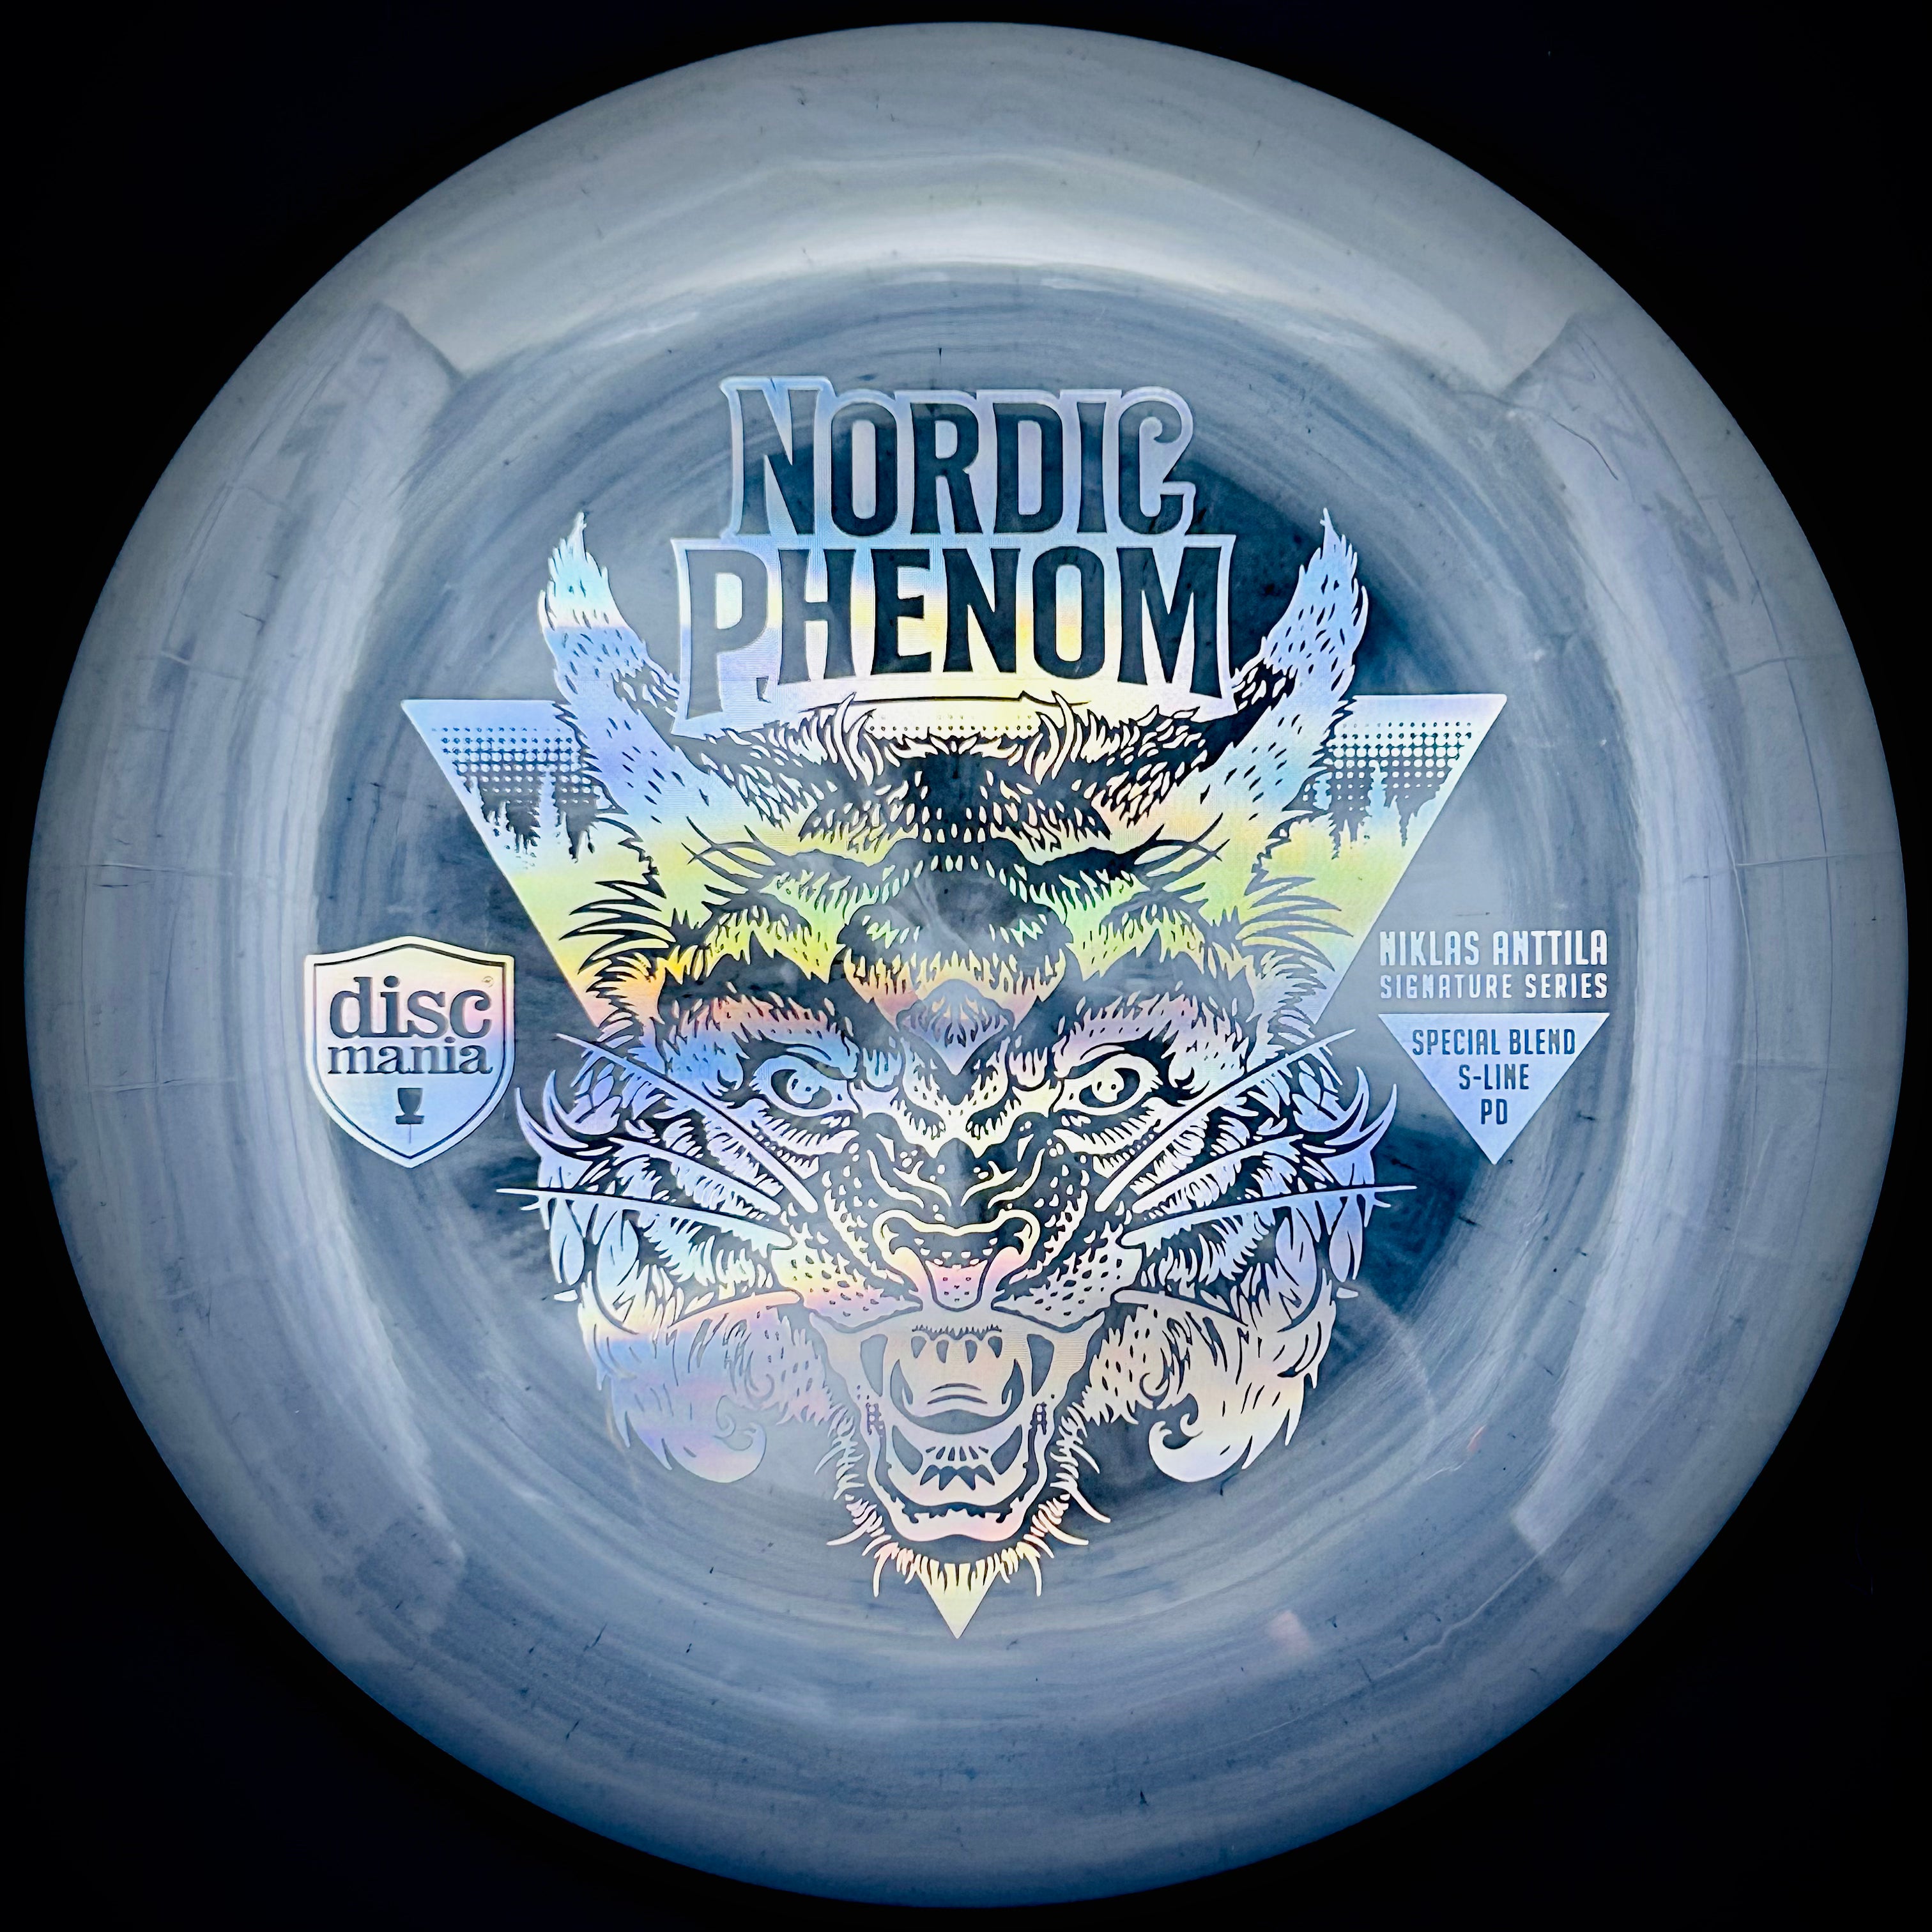 Discmania Nordic Phenom - Niklas Anttila Signature Series Special Blend S-Line PD